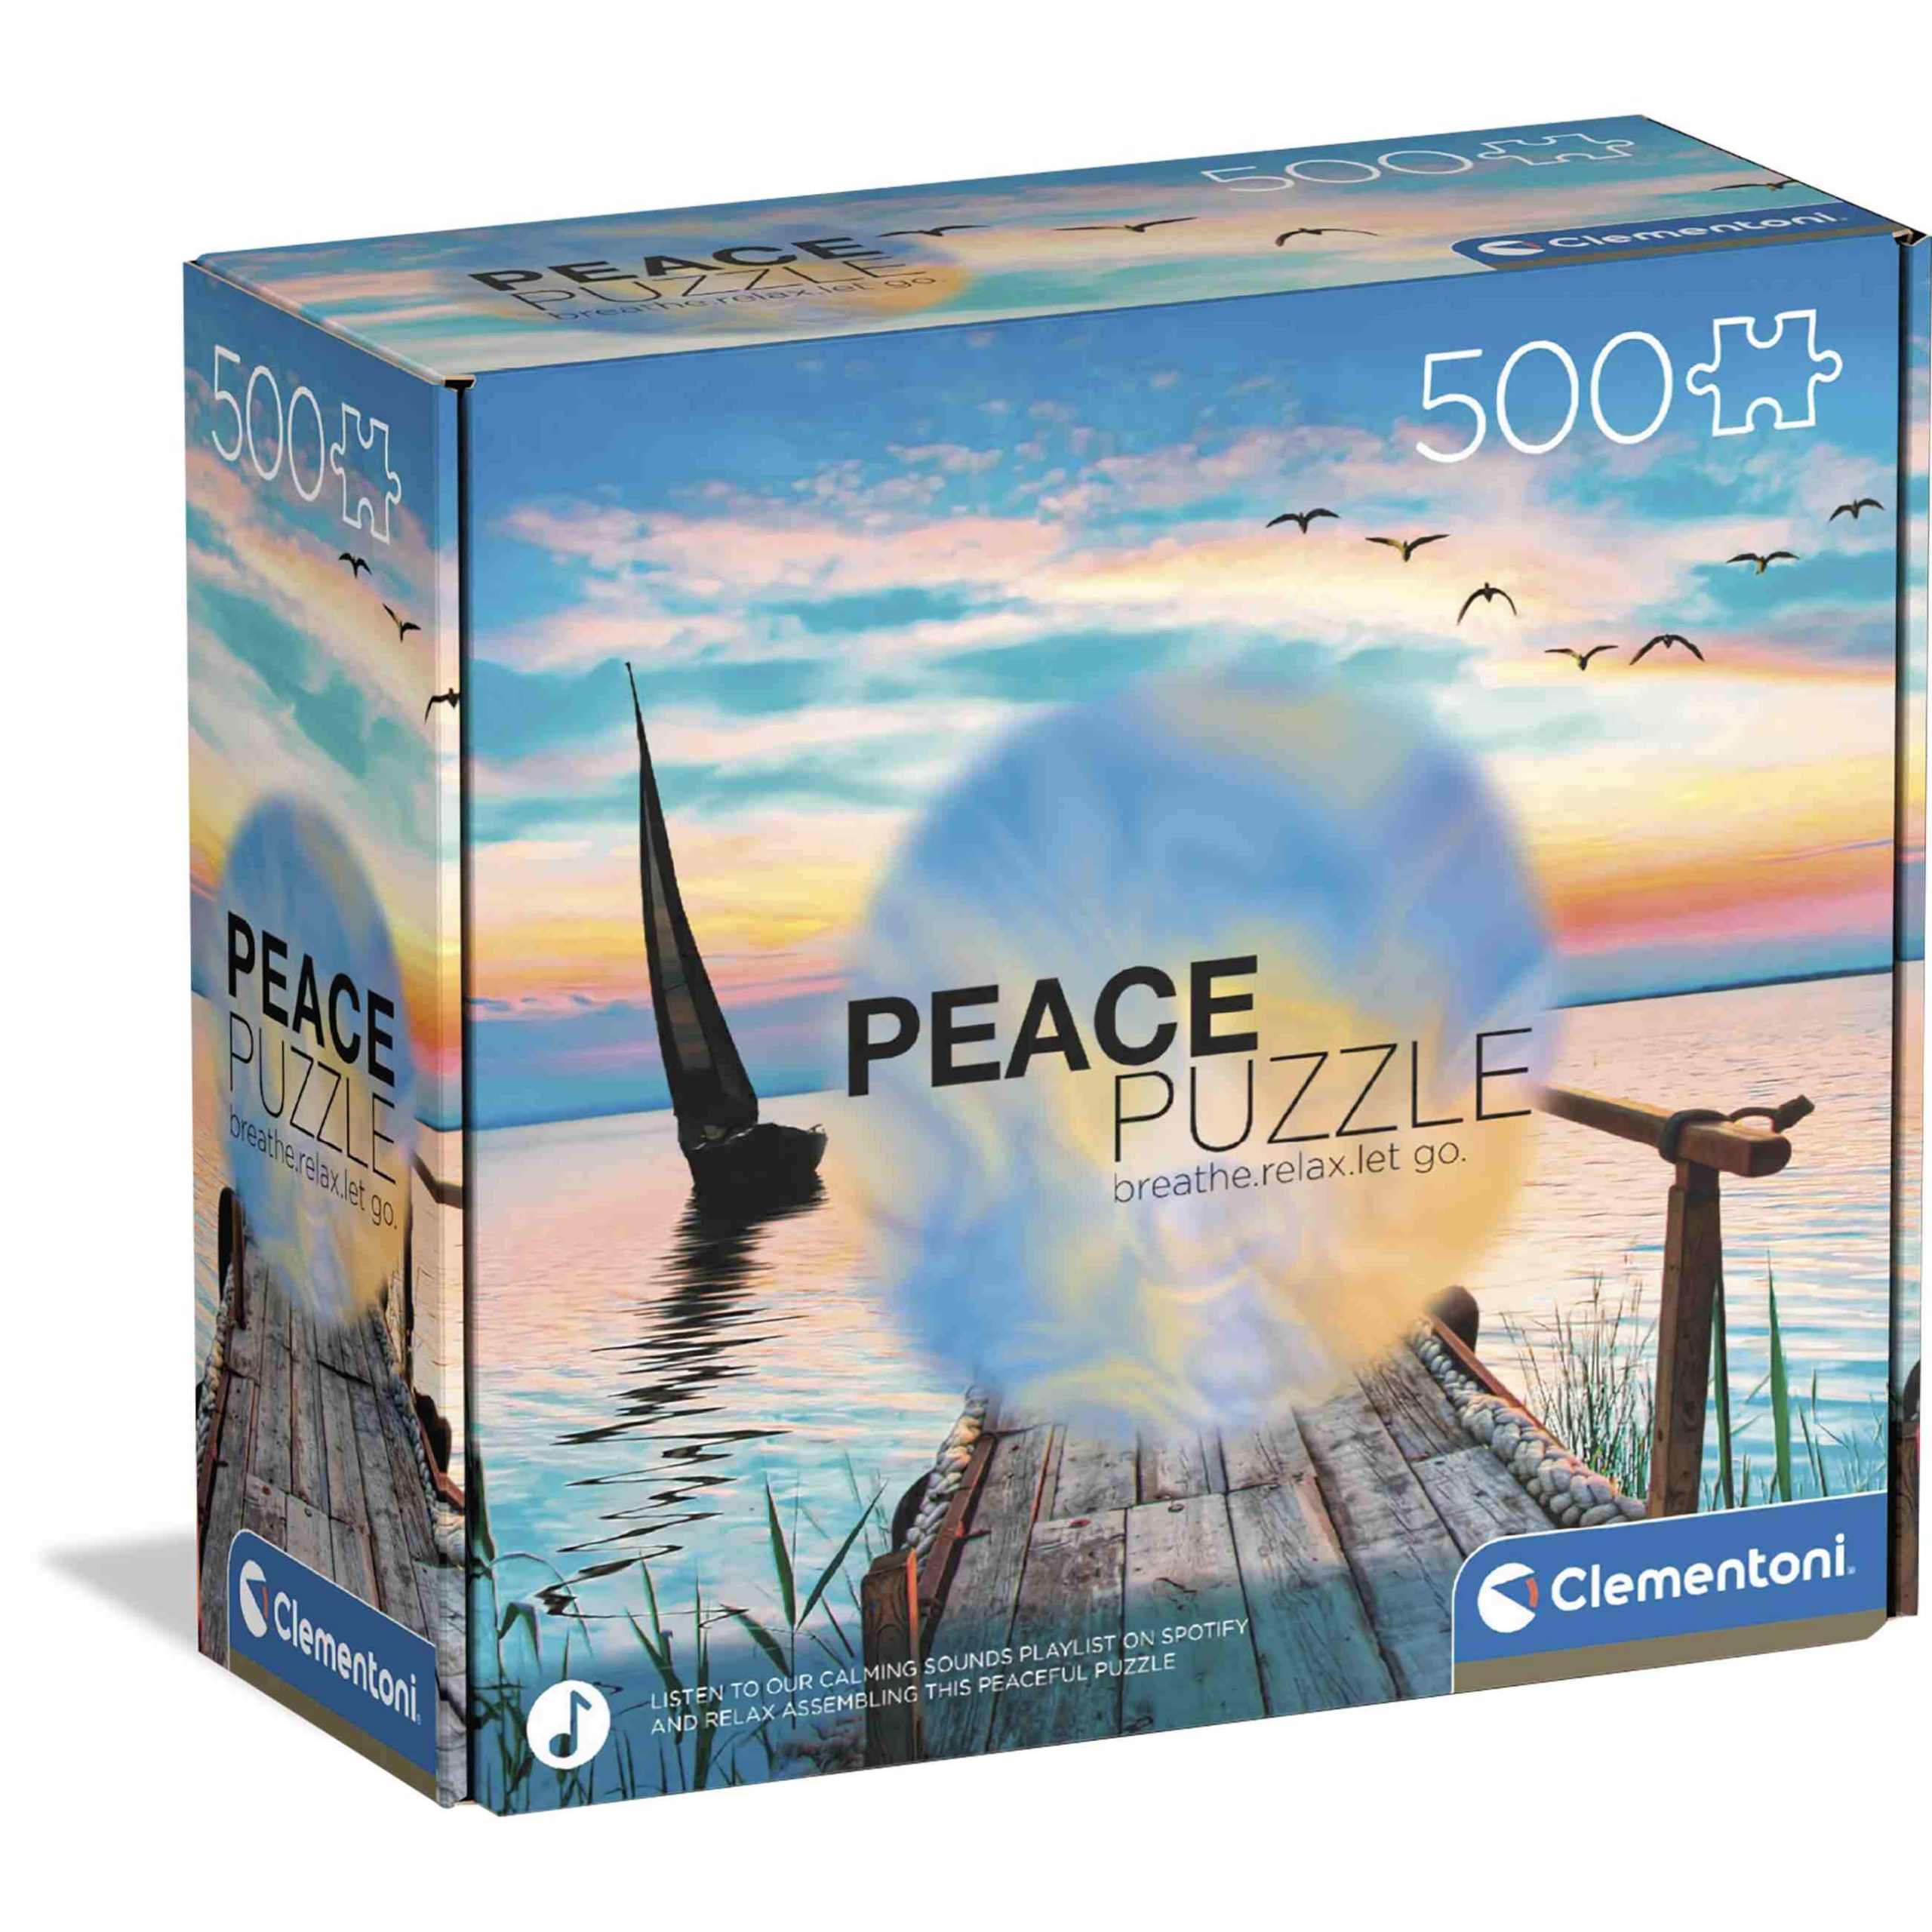 Clementoni peace puzzle the lake - 500 pezzi - CLEMENTONI